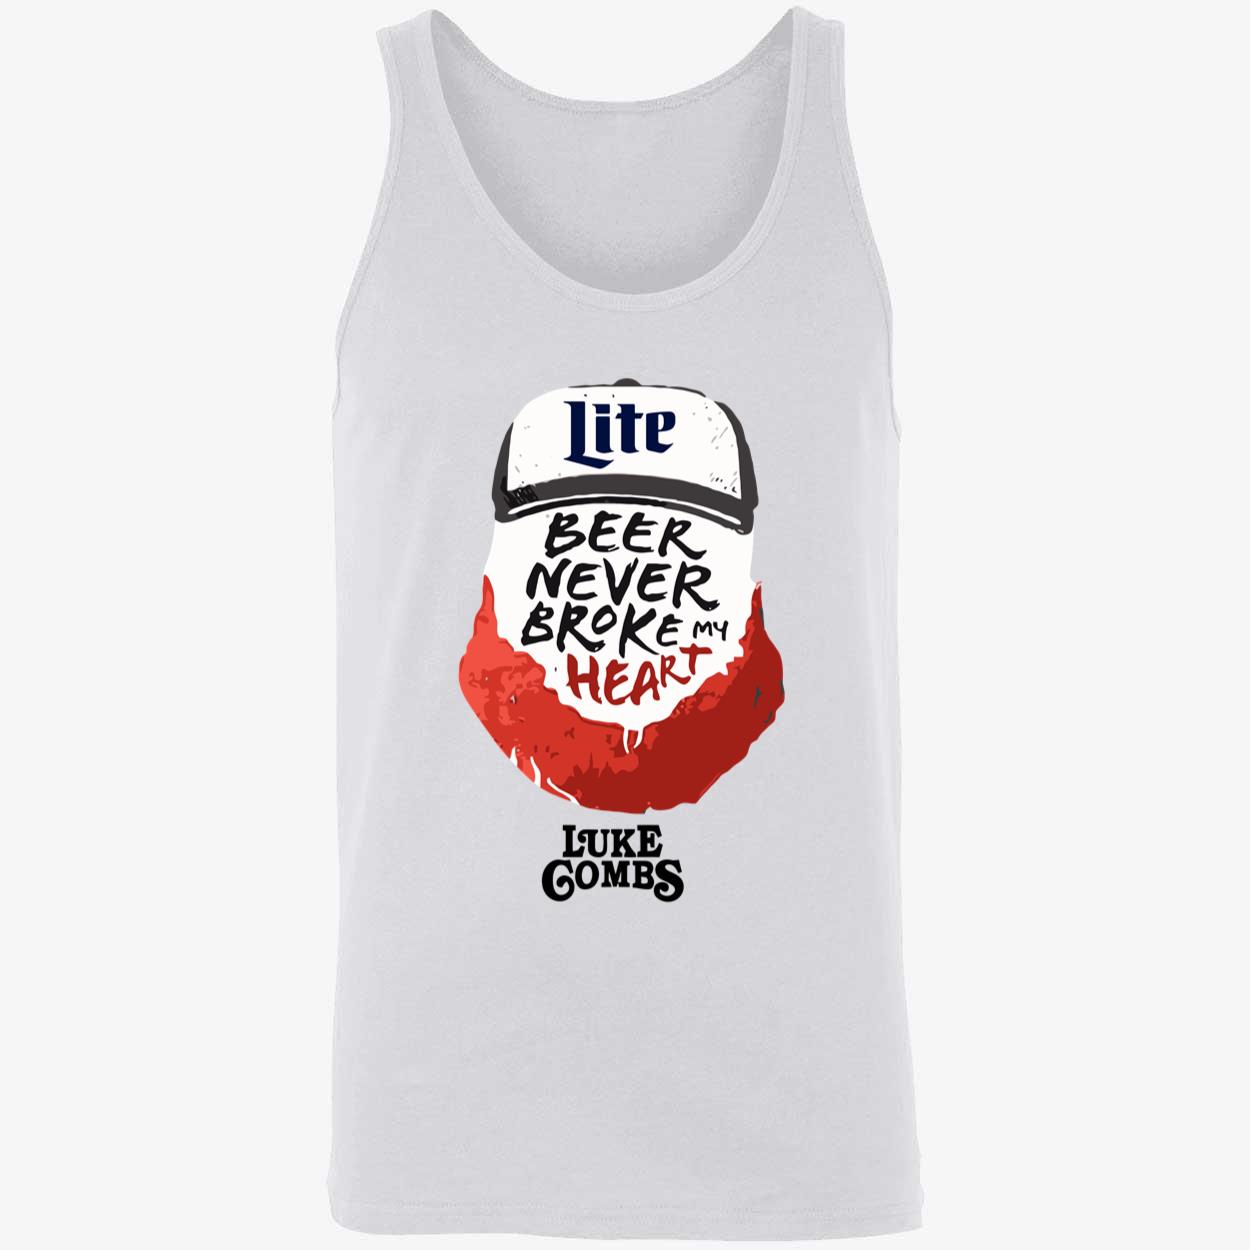 Luke Combs Miller Lite Beer Never Broke My Heart Shirt